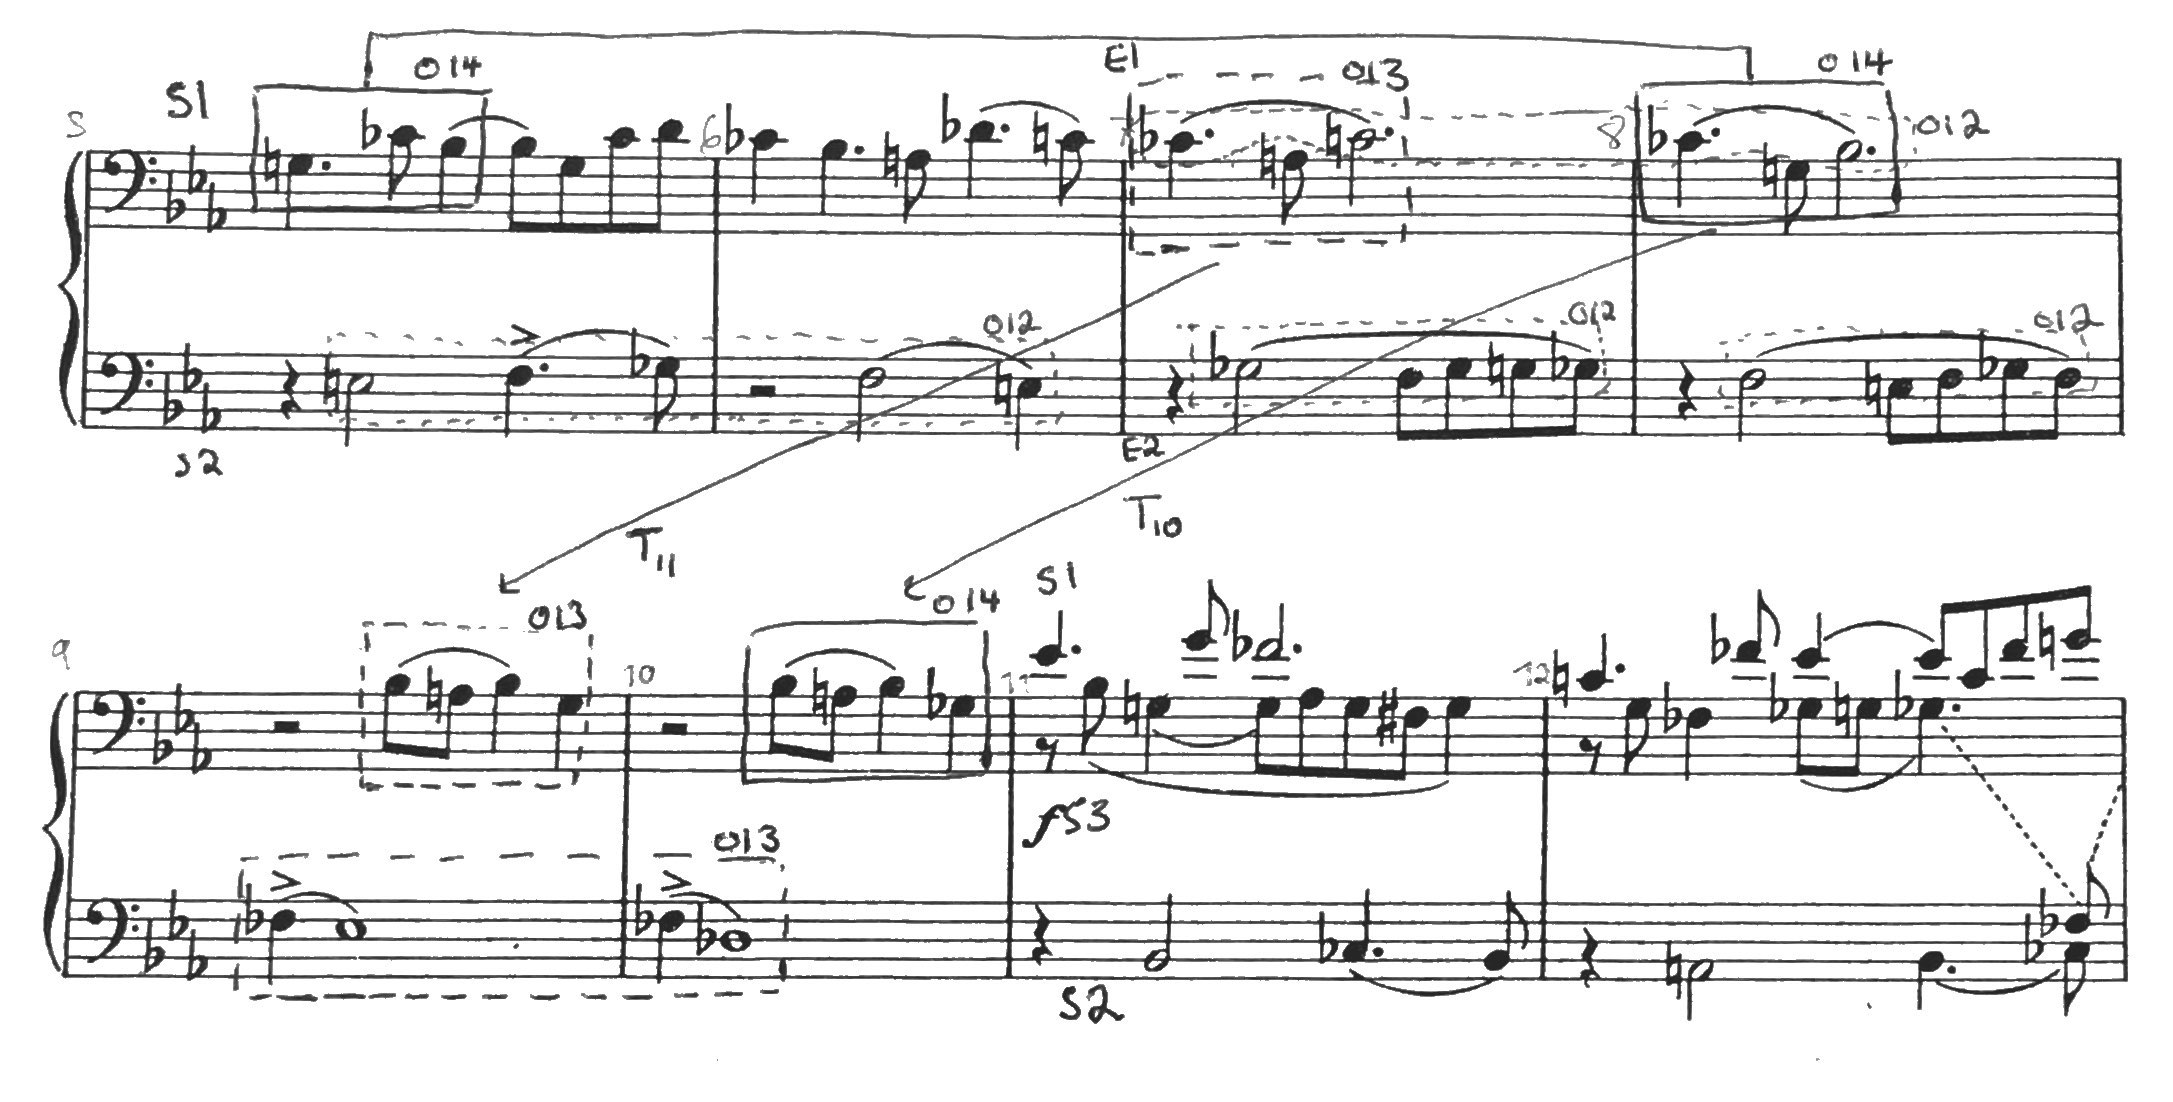 Set-theoretic analysis of Shostakovich op. 87, Fugue no. 19, mm. 5-12